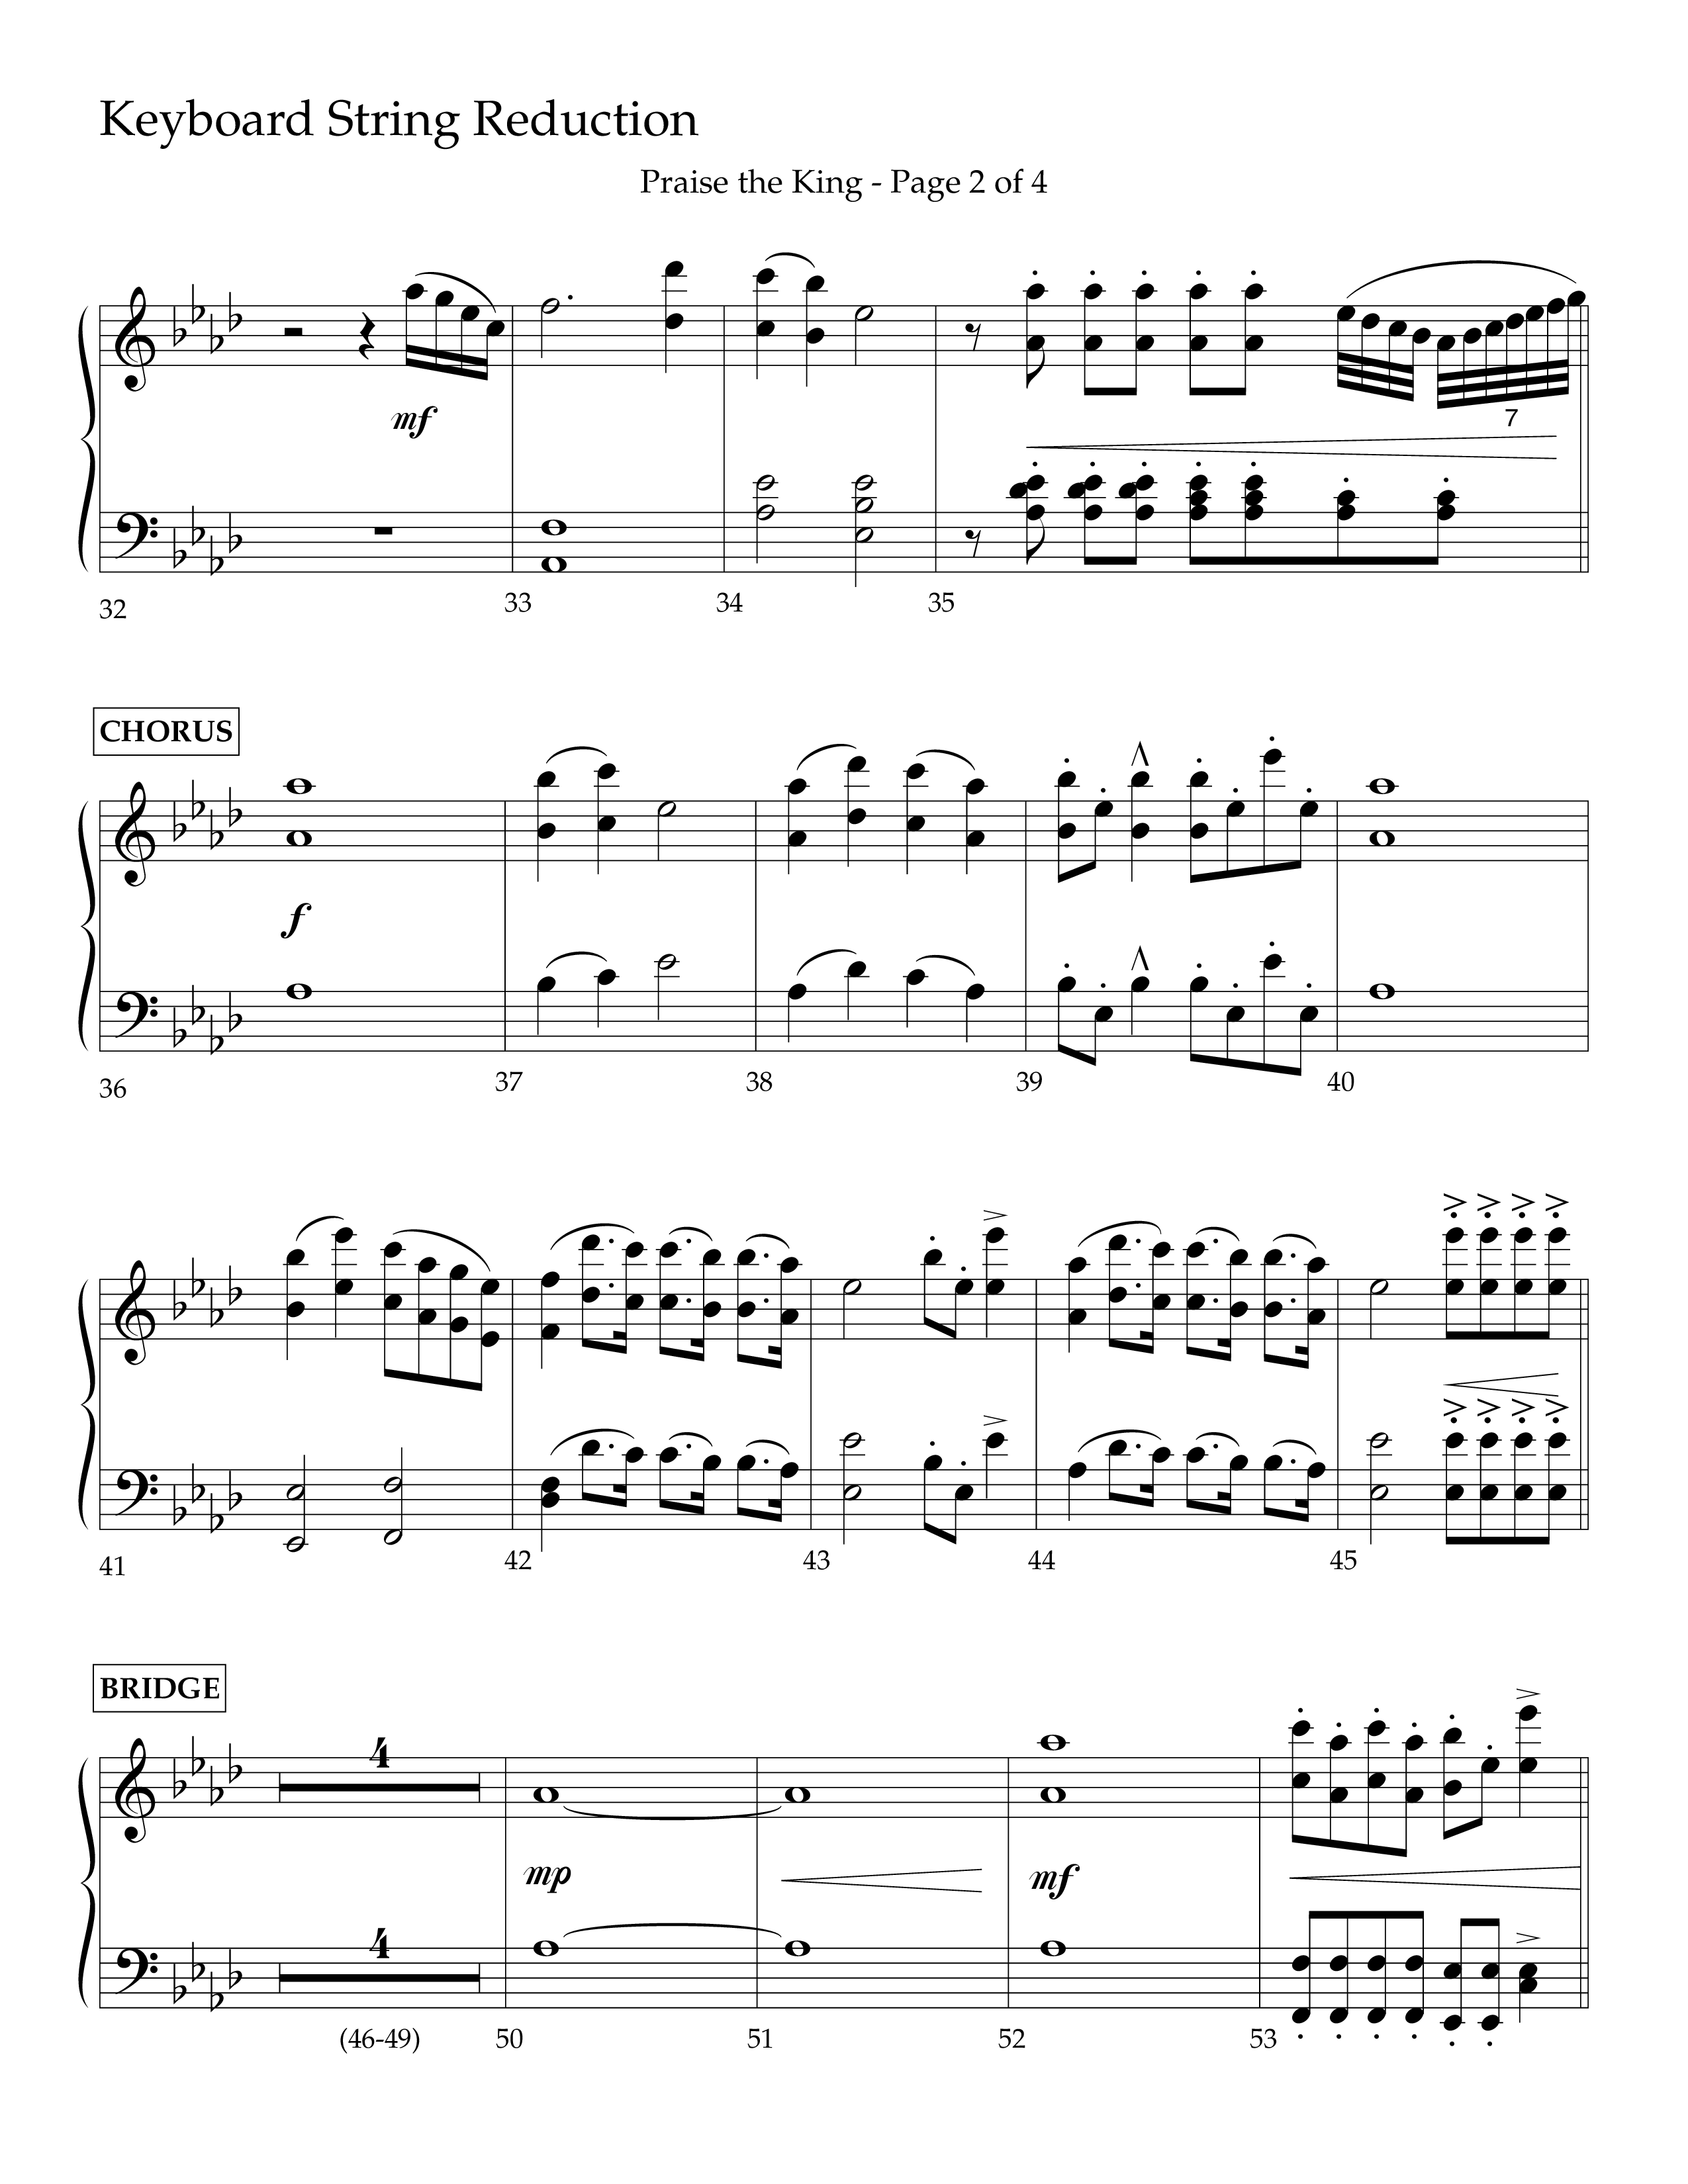 Praise The King (Choral Anthem SATB) String Reduction (Lifeway Choral / Arr. Phil Nitz)